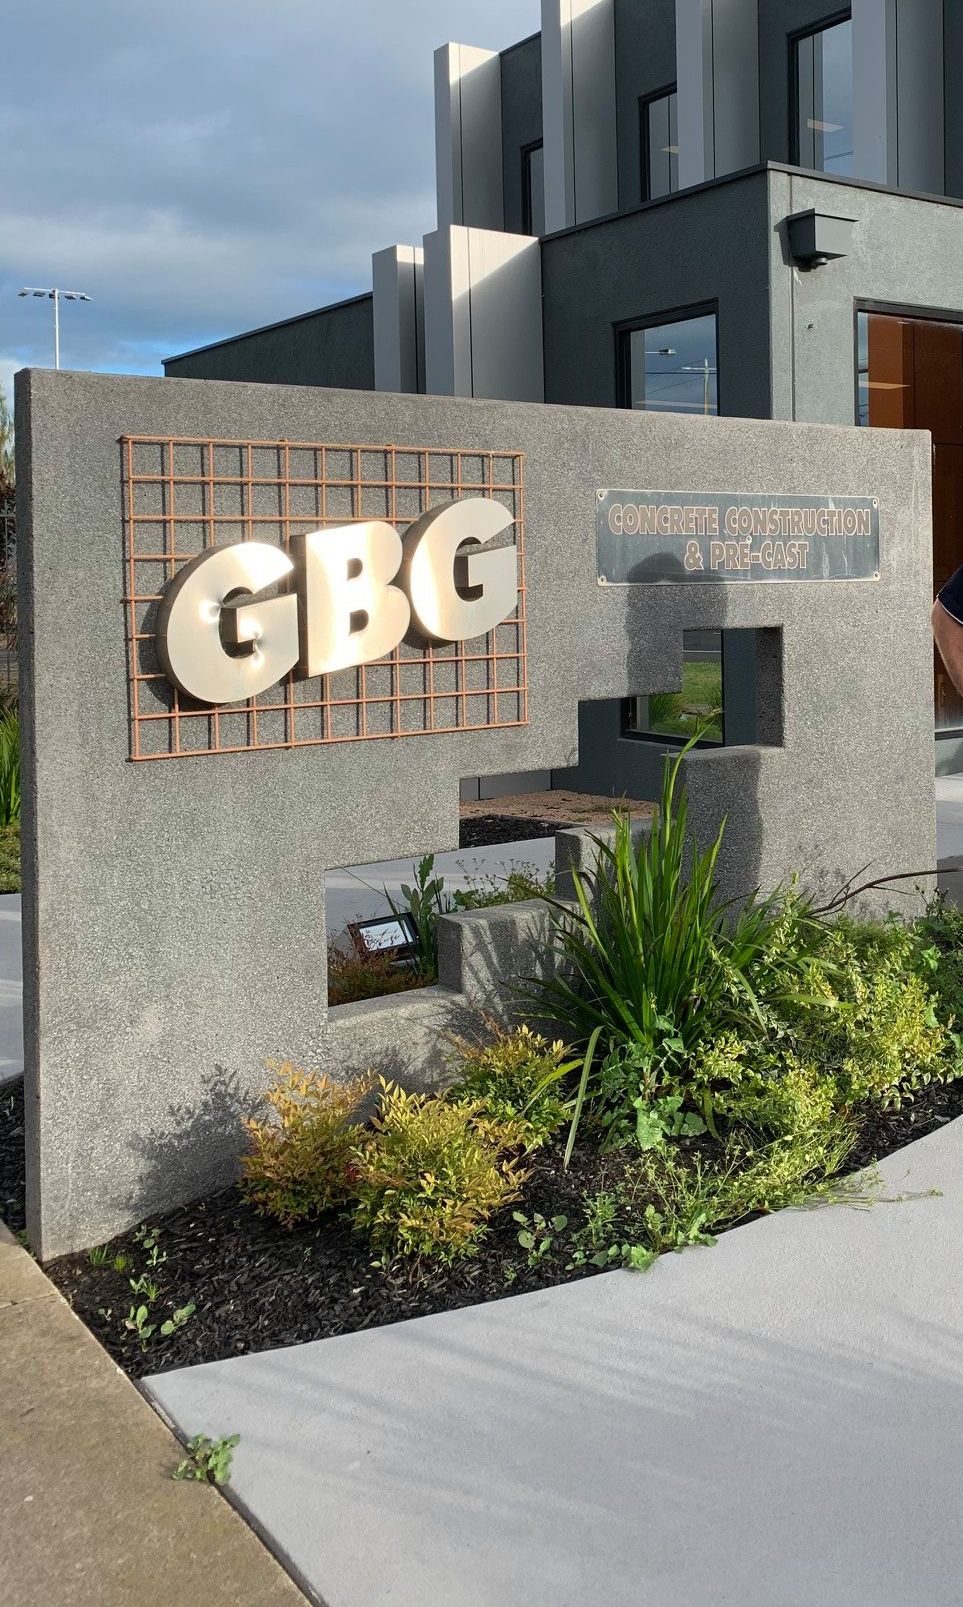 Gbg Concrete